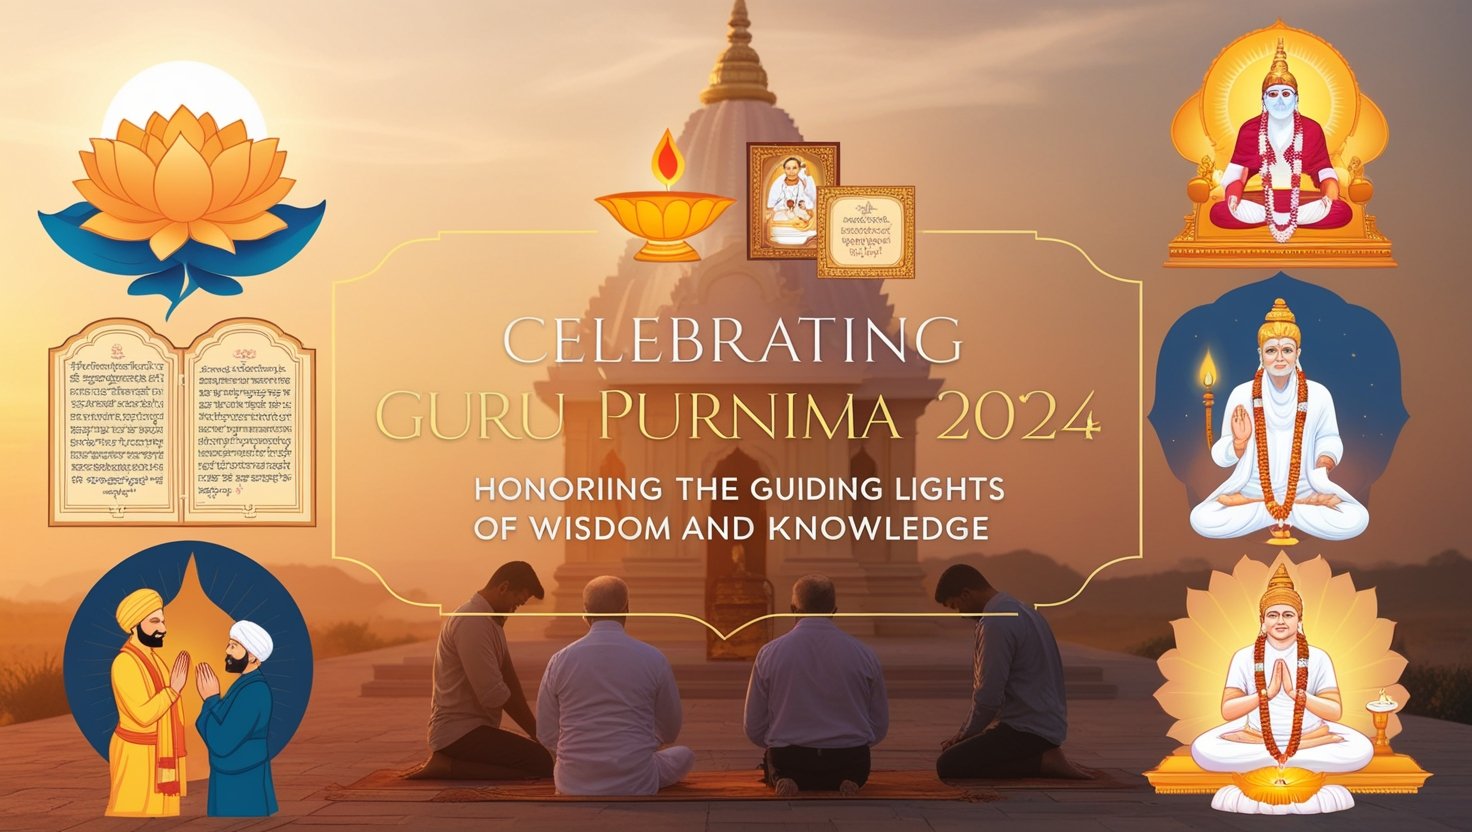 Celebrating Guru Purnima 2024: Honoring the Guiding Lights of Wisdom and Knowledge